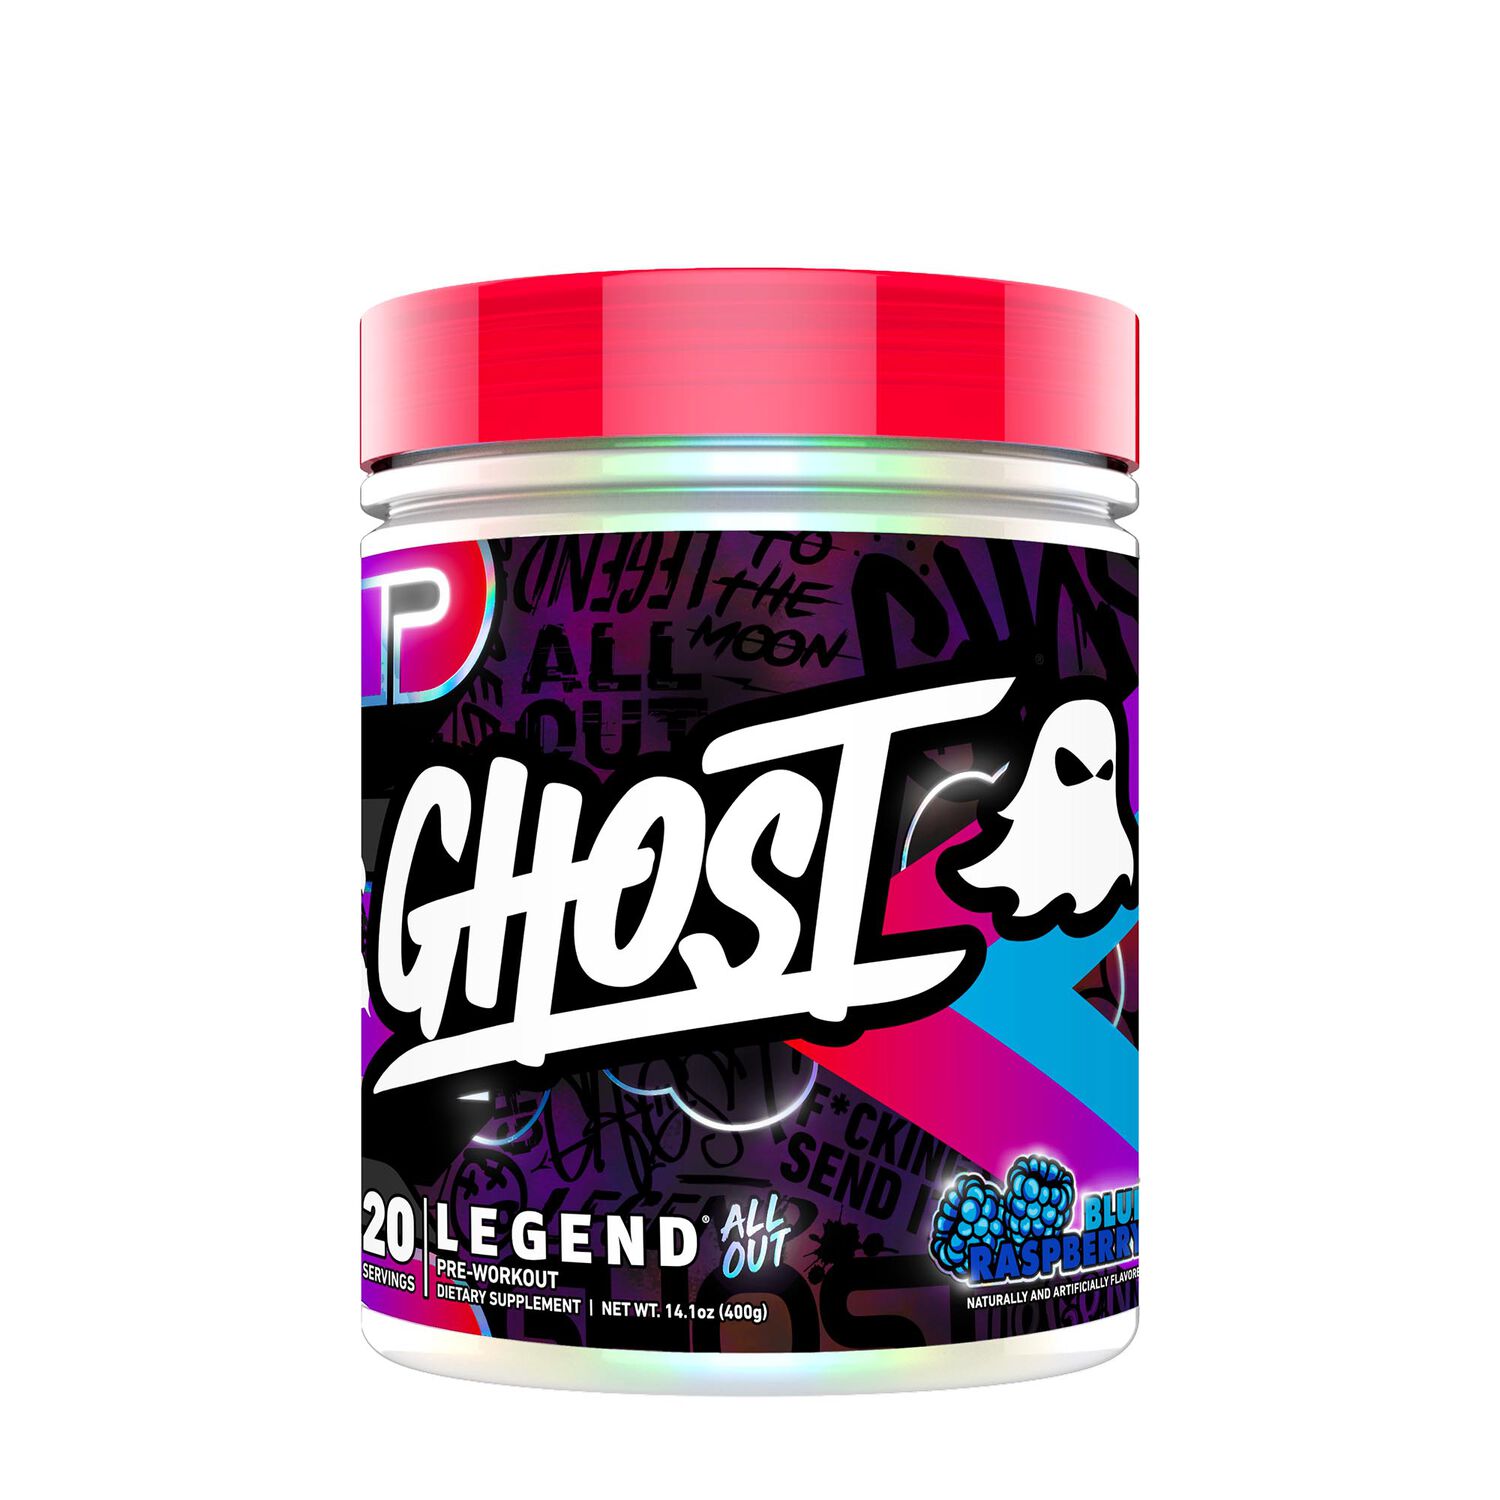 Ghost Legend: The Pre-Workout of Legends – V3 Has Landed!